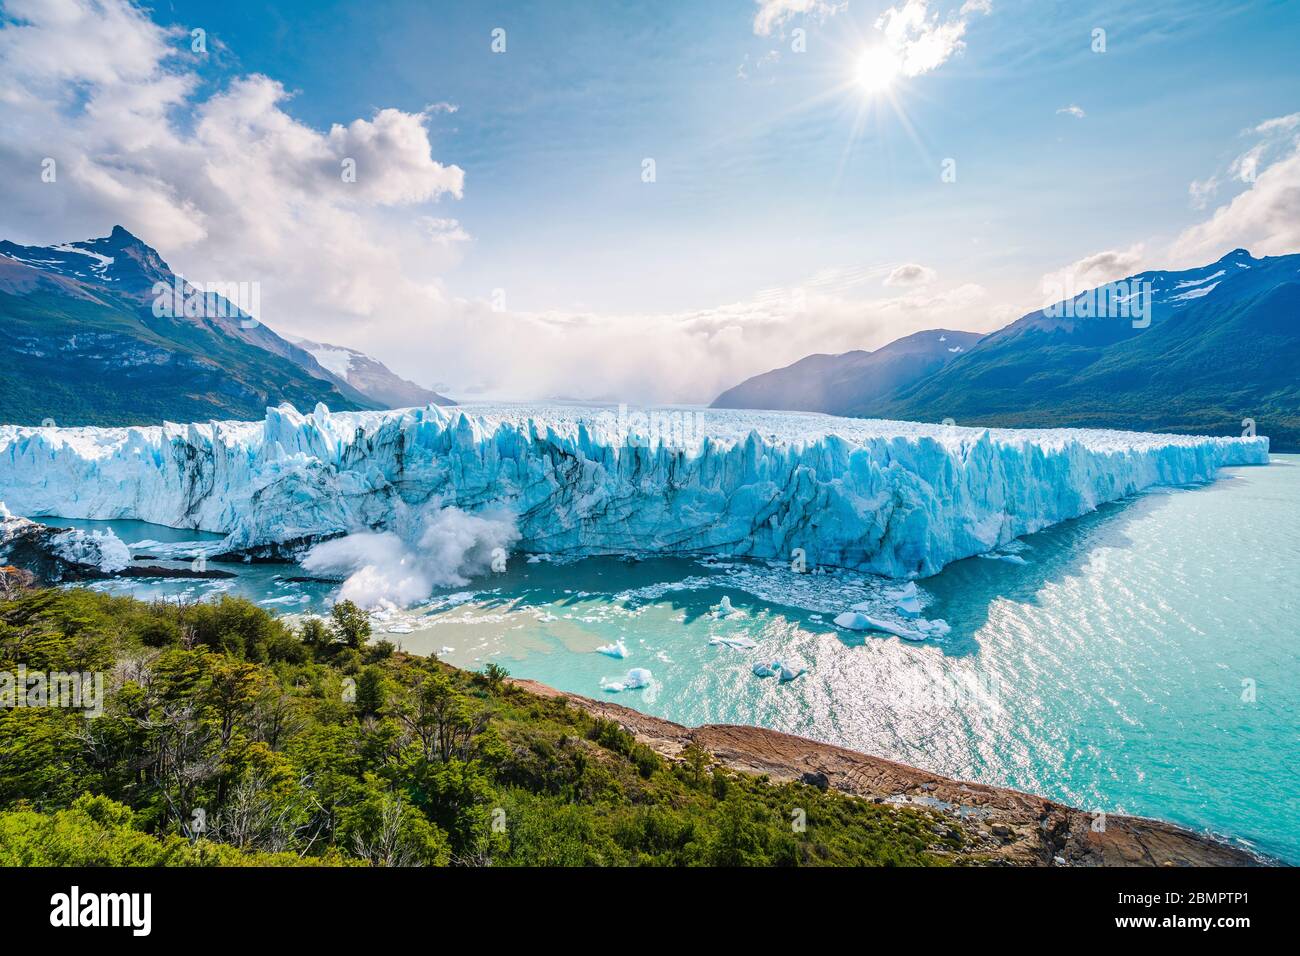 Ice collapsing into the water at Perito Moreno Glacier in Los Glaciares National Park near El Calafate, Patagonia Argentina, South America. Stock Photo